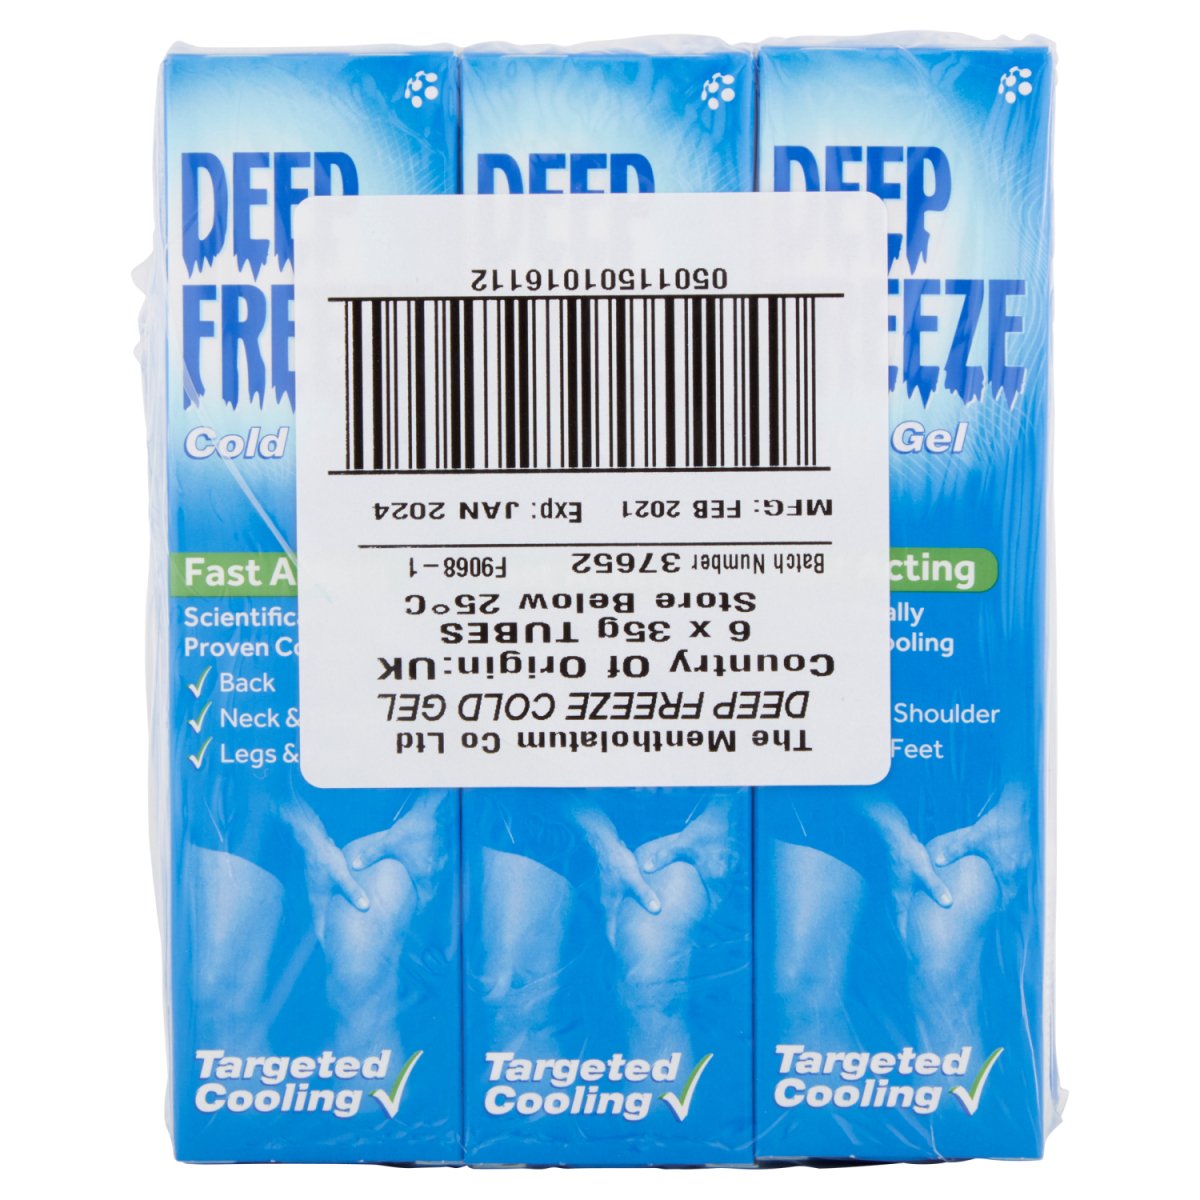 Deep Freeze Pain Relief Cold Gel - Intamarque - Wholesale 5011501016105